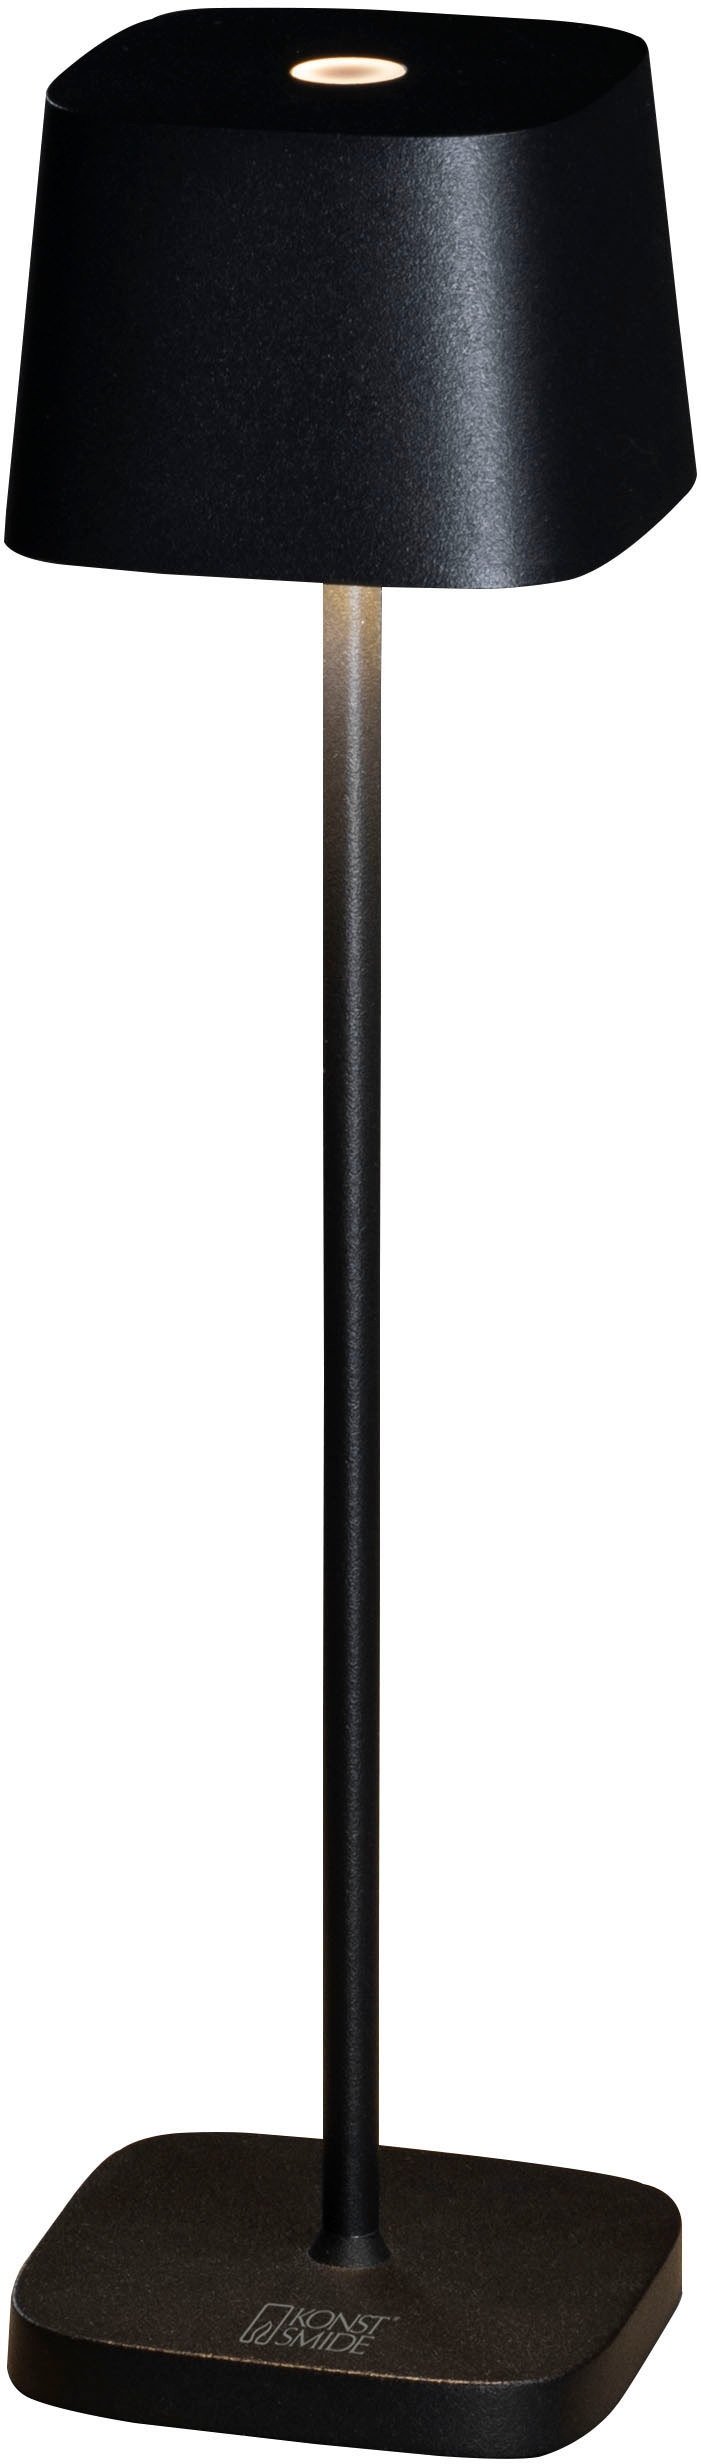 KONSTSMIDE LED Tischleuchte »Capri-Mini«, Capri-Mini USB-Tischl. schwarz, 2700/3000K, dimmbar, eckig